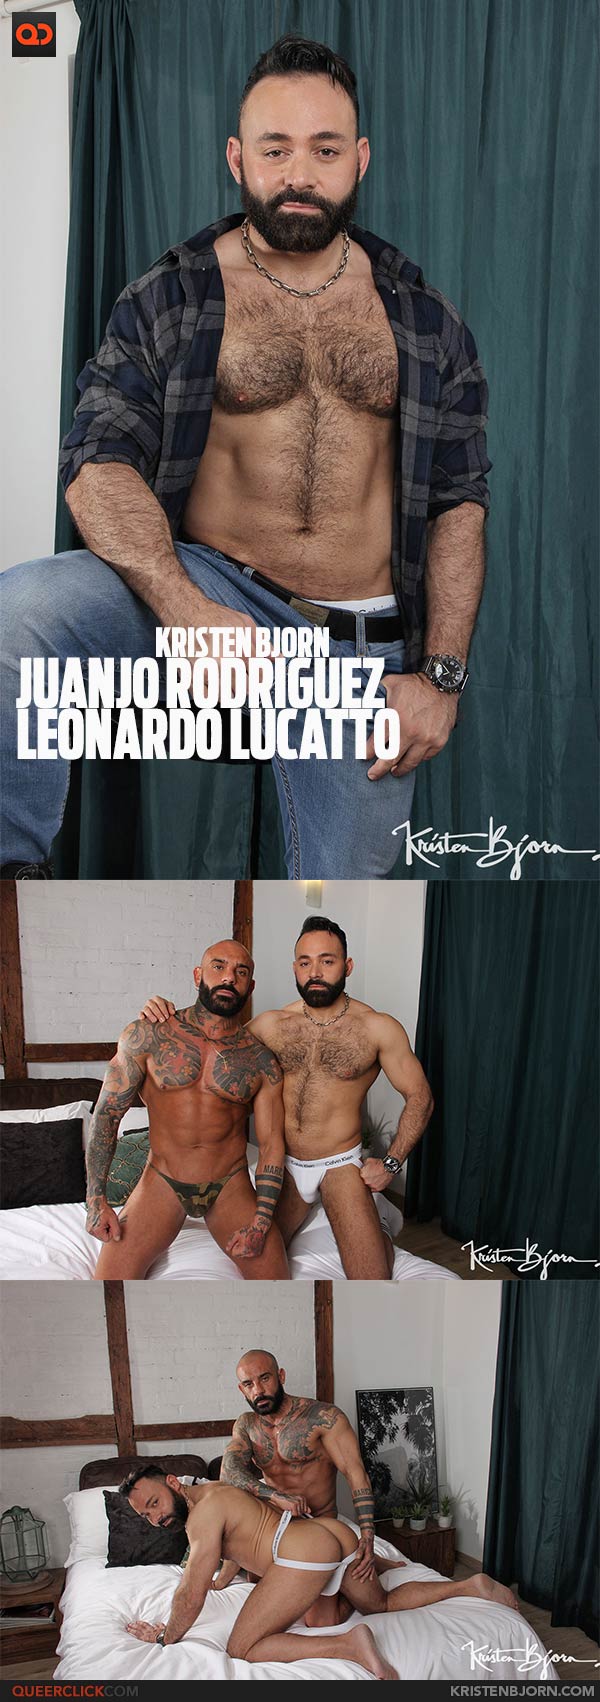 KristenBjorn: Juanjo Rodriguez and Leonardo Lucatto